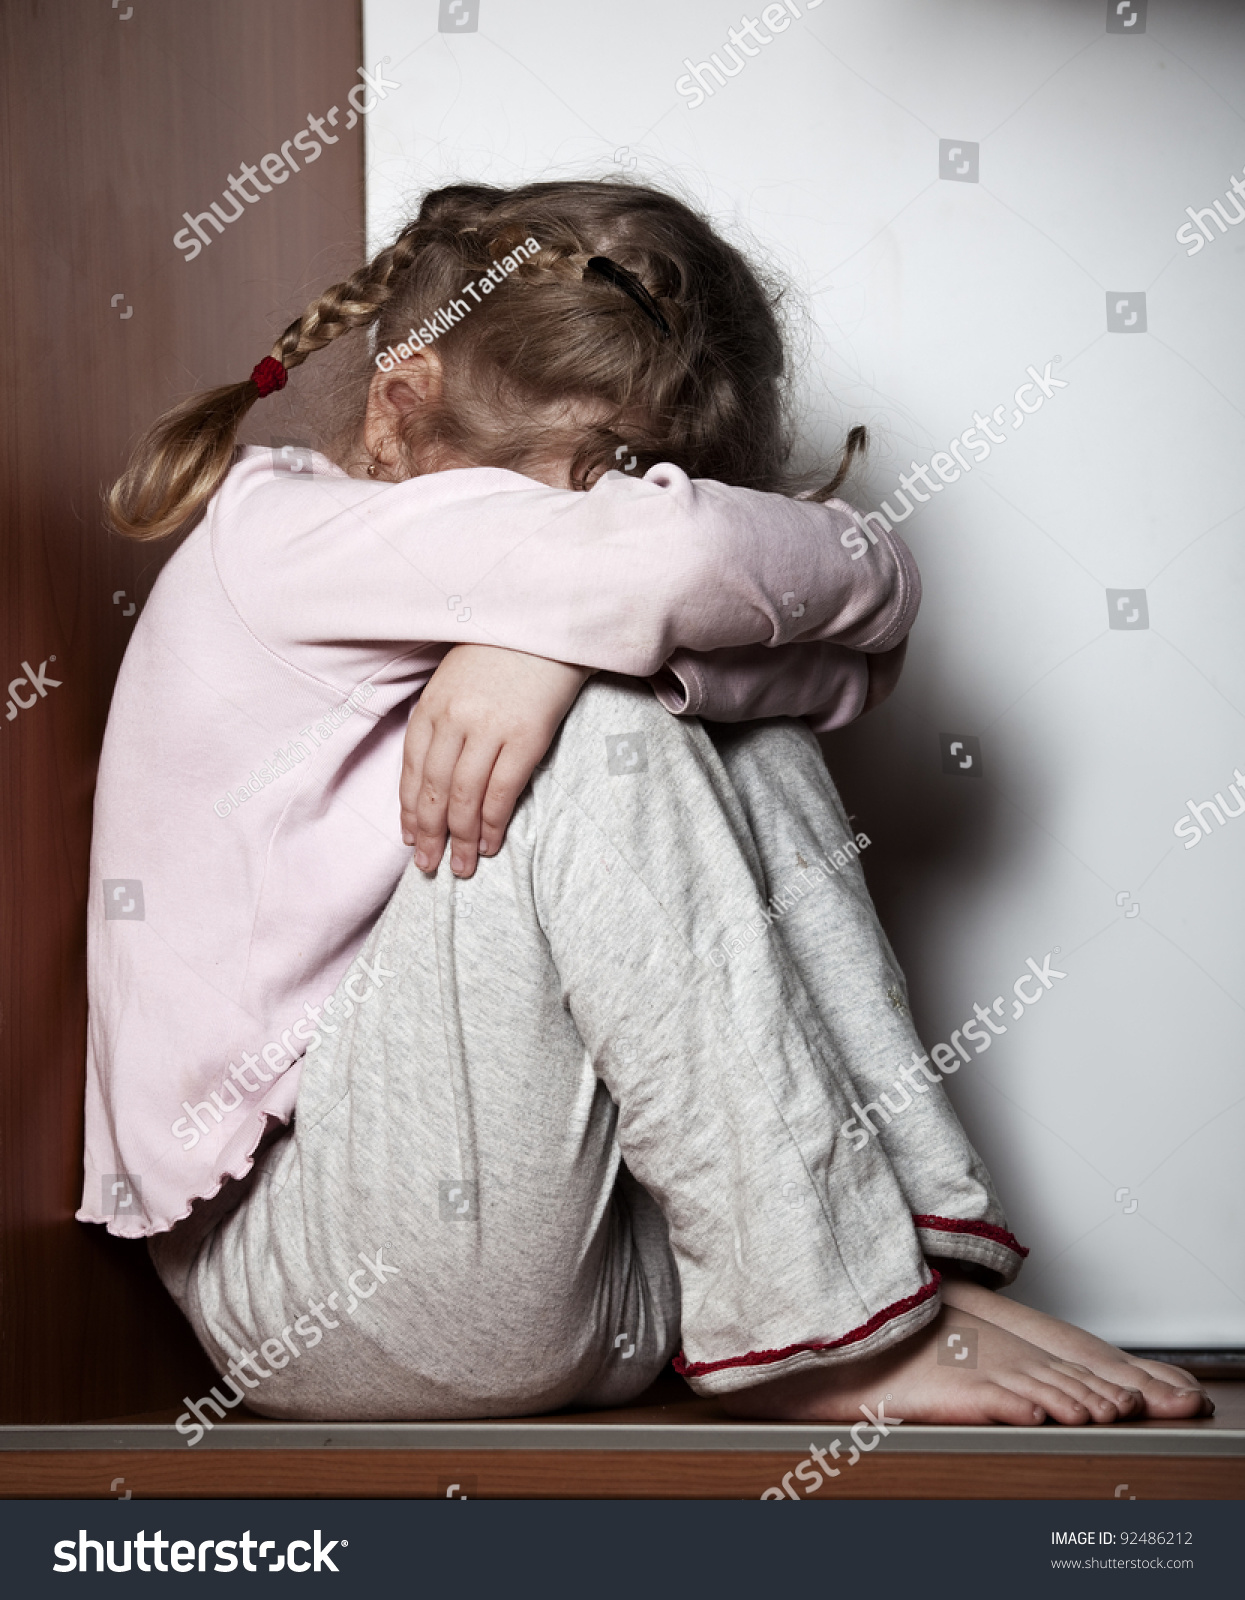 Sad Little Girl. Child'S Problems Stock Photo 92486212 : Shutterstock